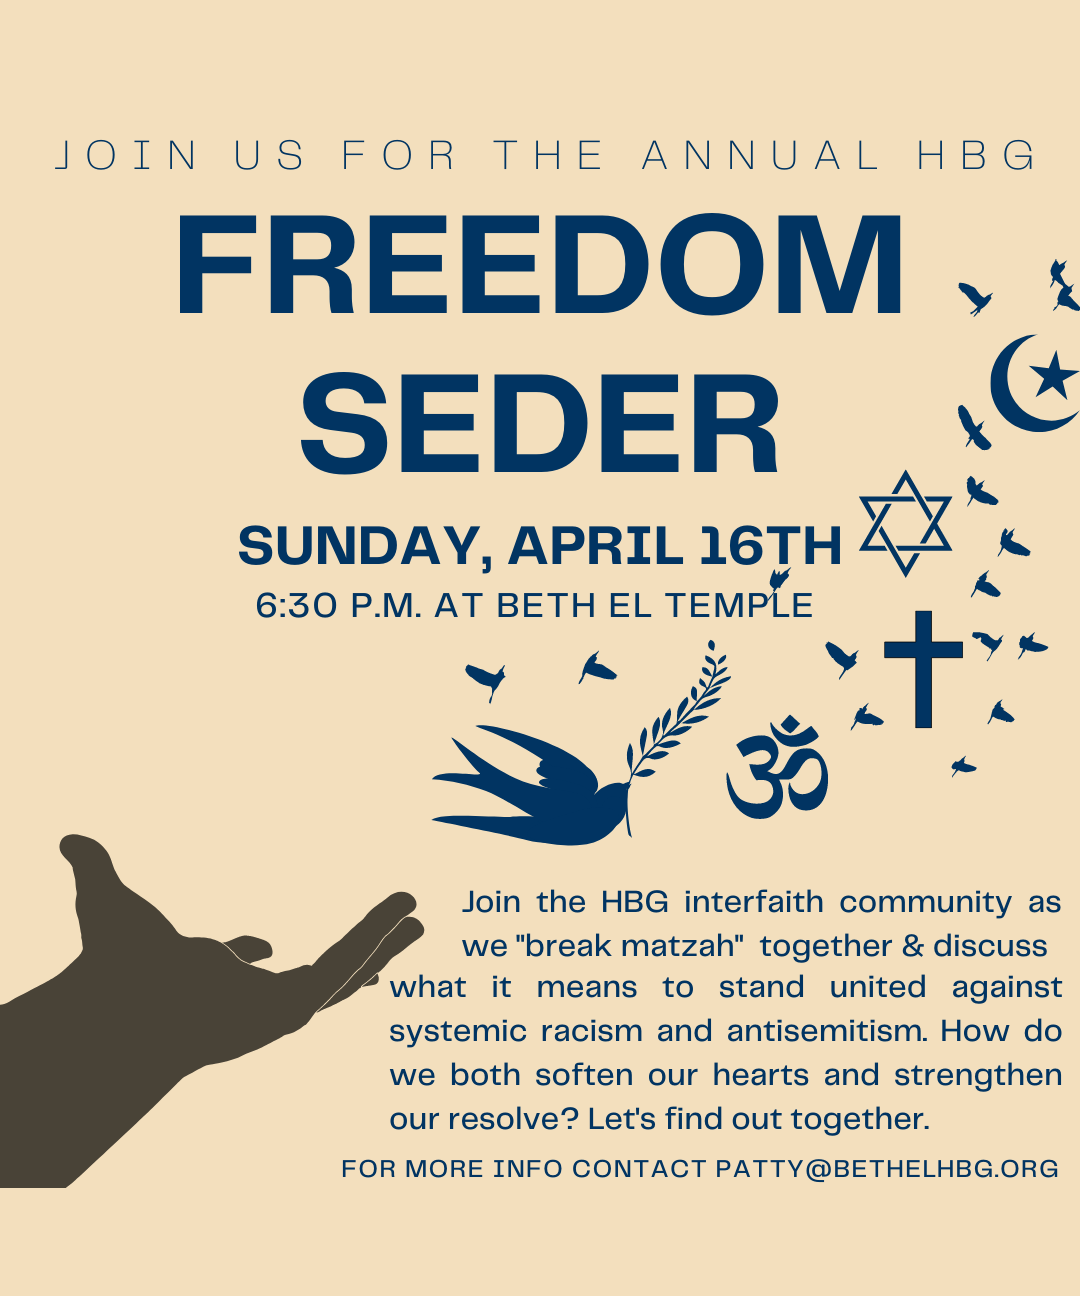 Interfaith Freedom Seder at Beth El Temple